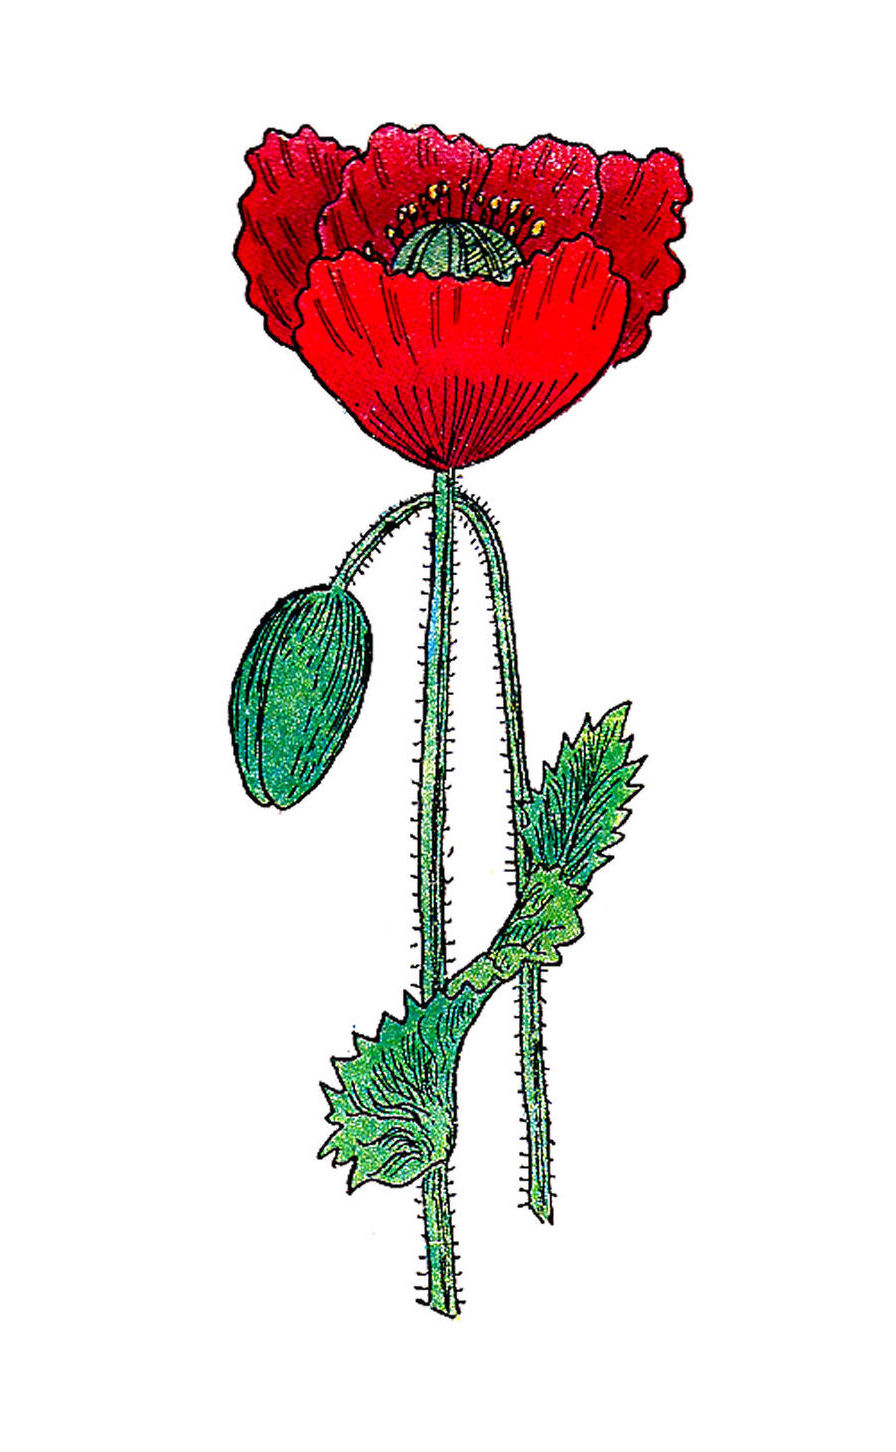 Antique Images: Free Botanical Graphic: Vintage Poppy Flower ...